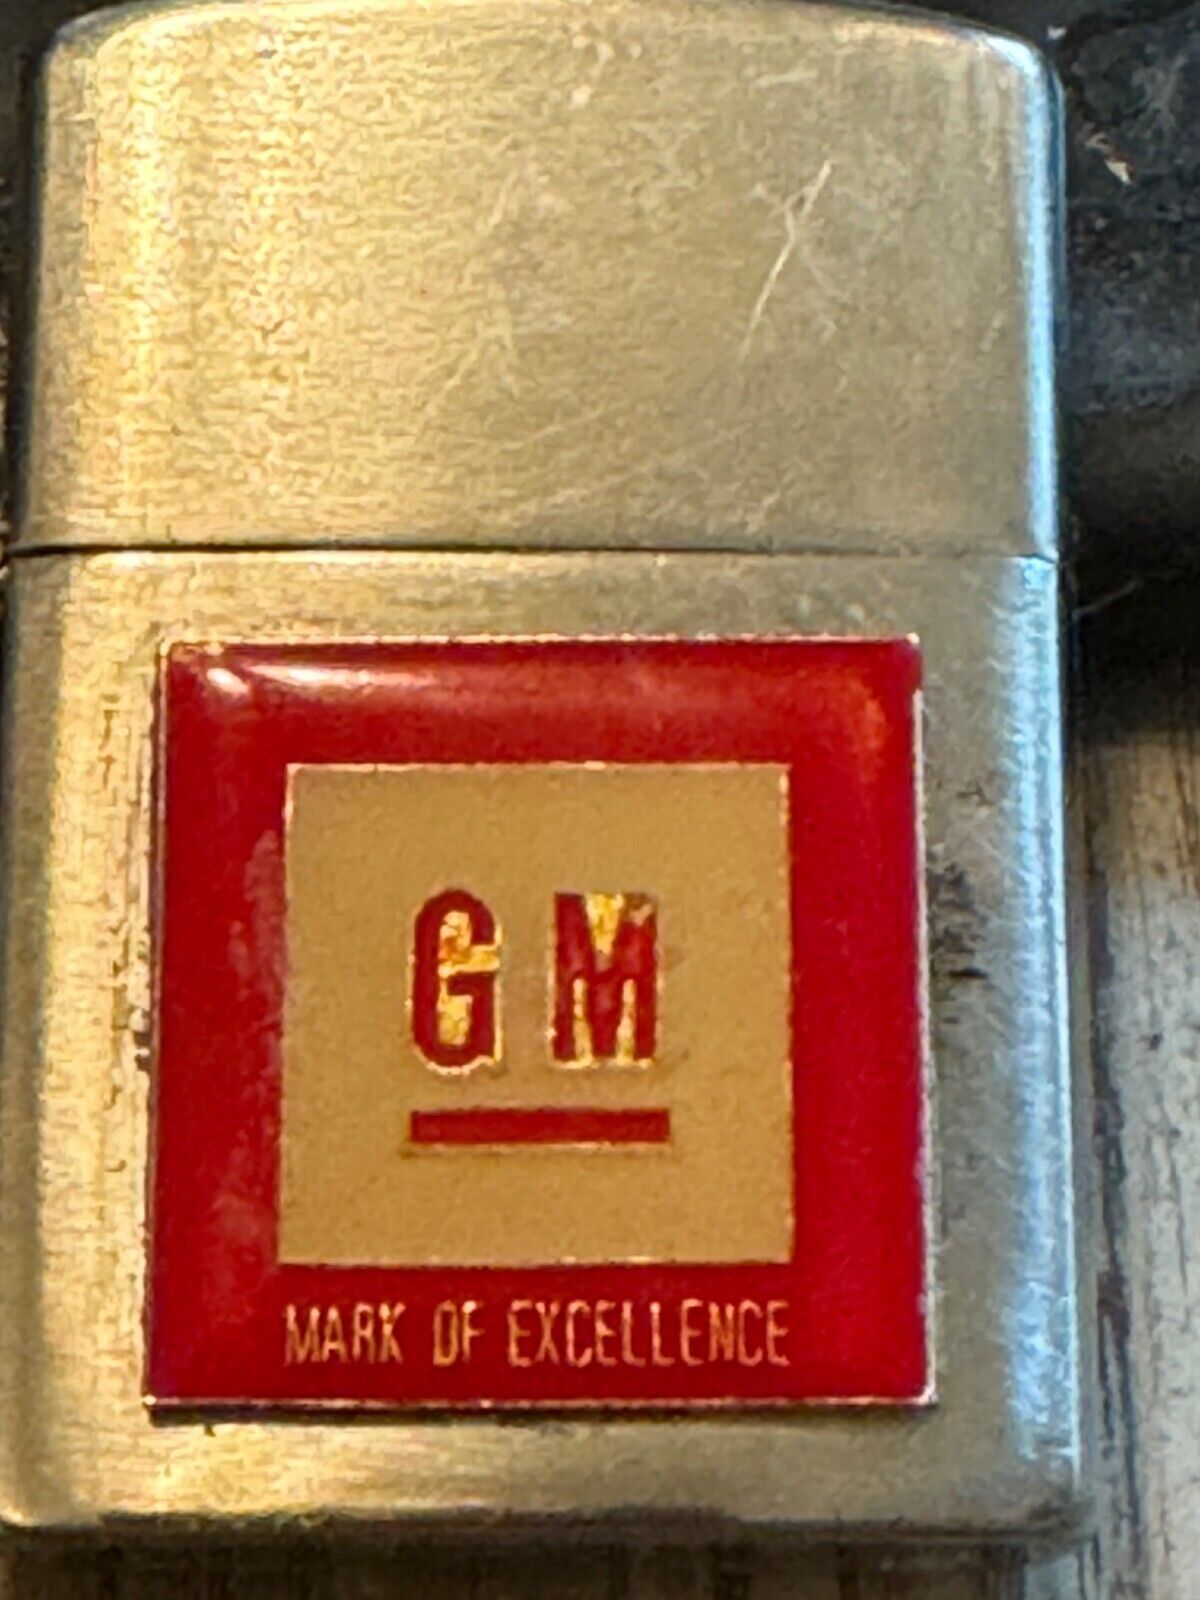 Lighter General Motors